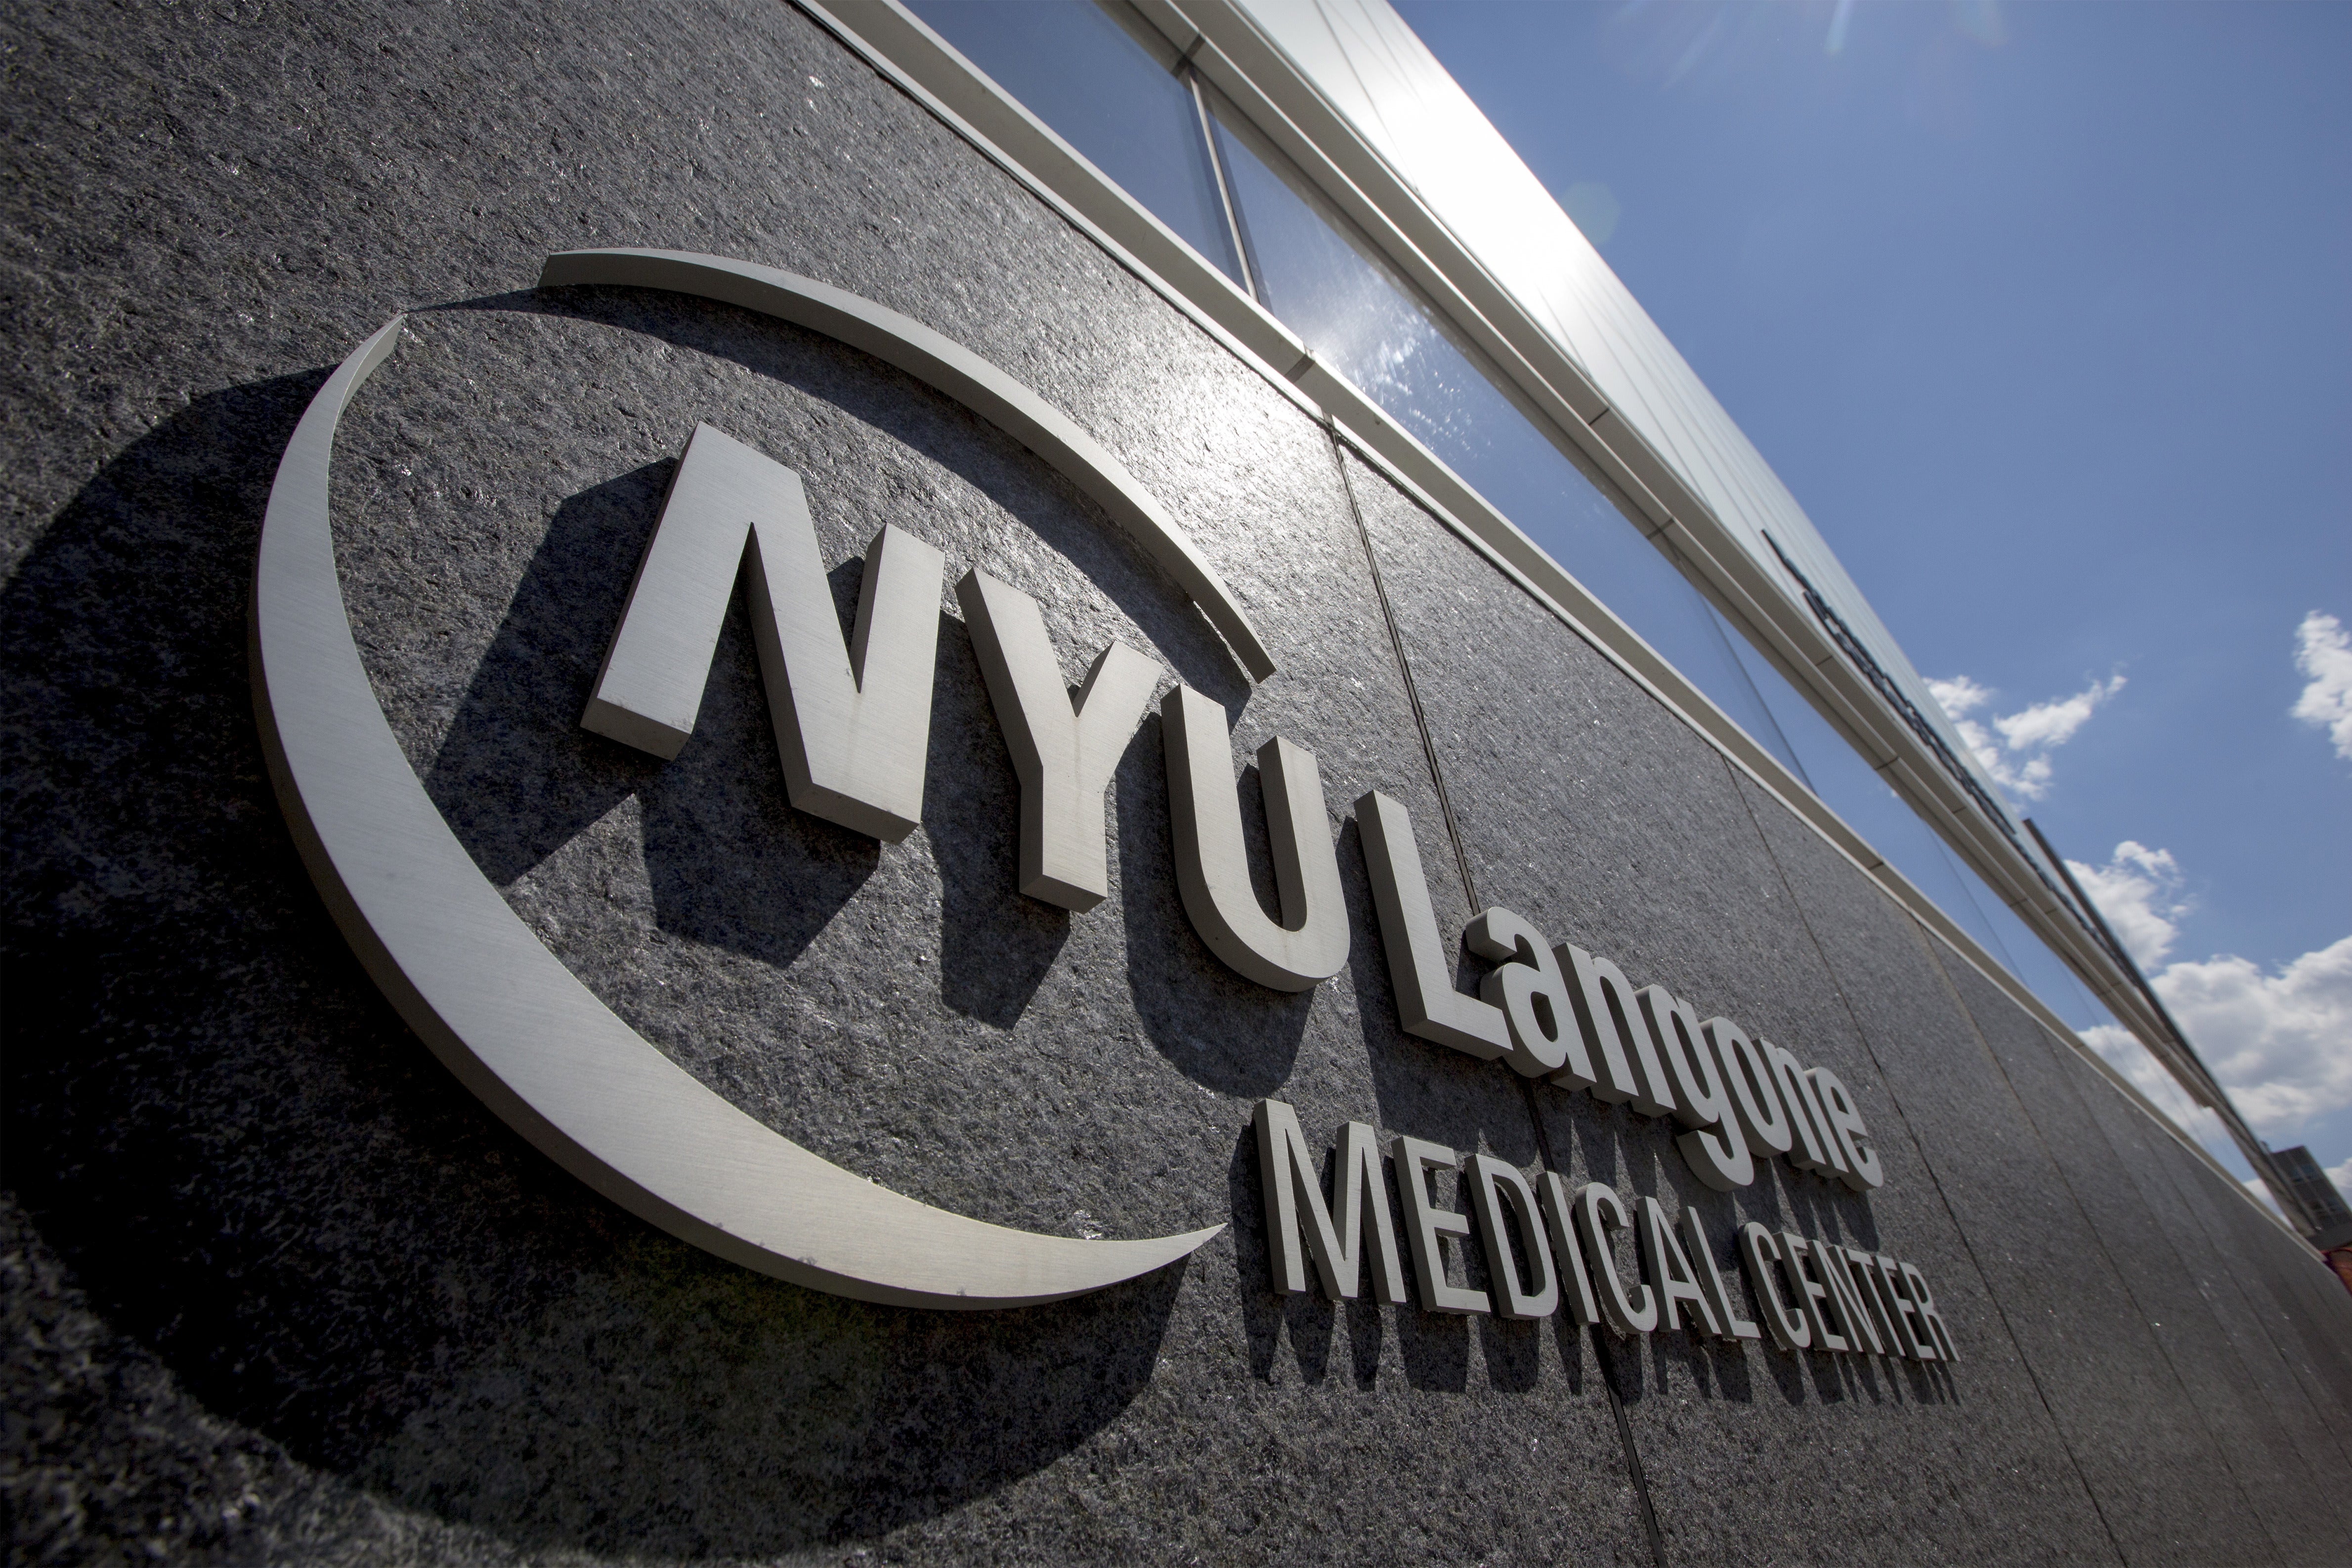 The NYU Langone Medical Center sign.